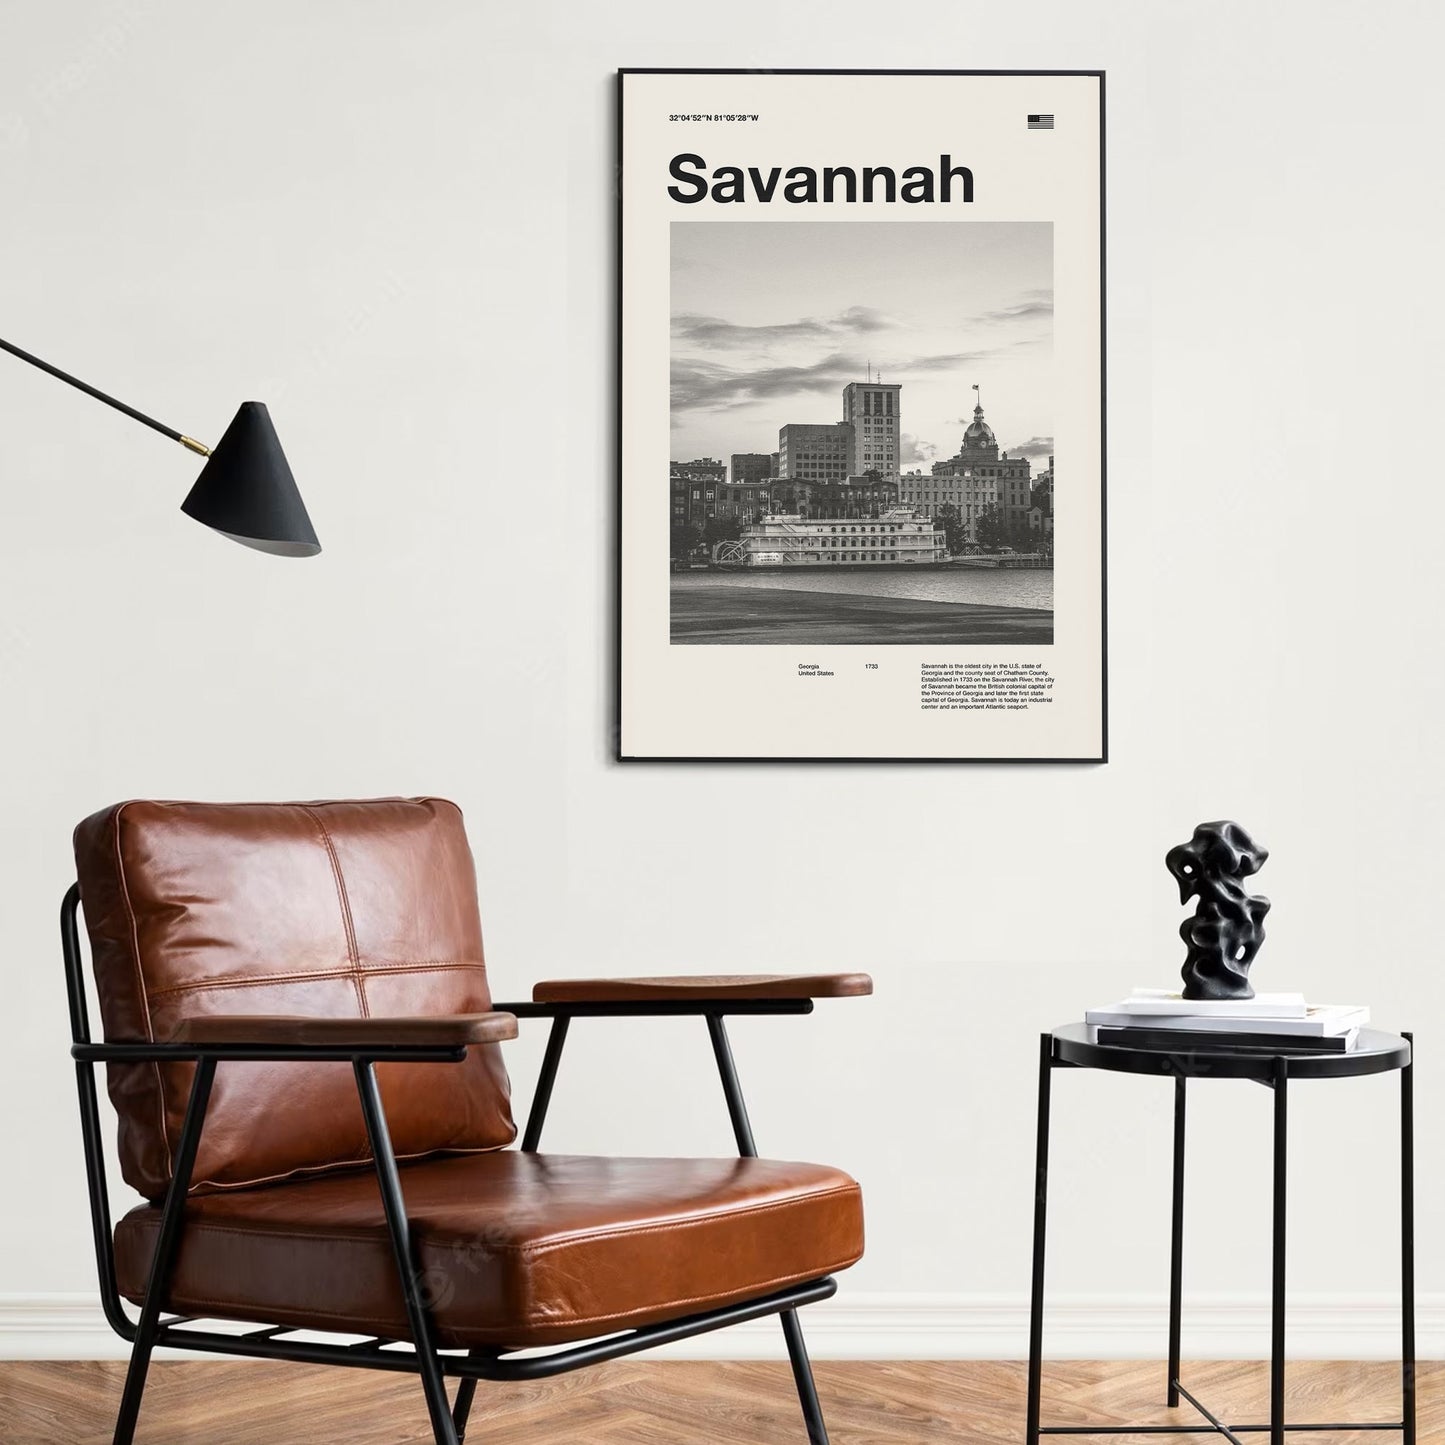 Savannah City Poster